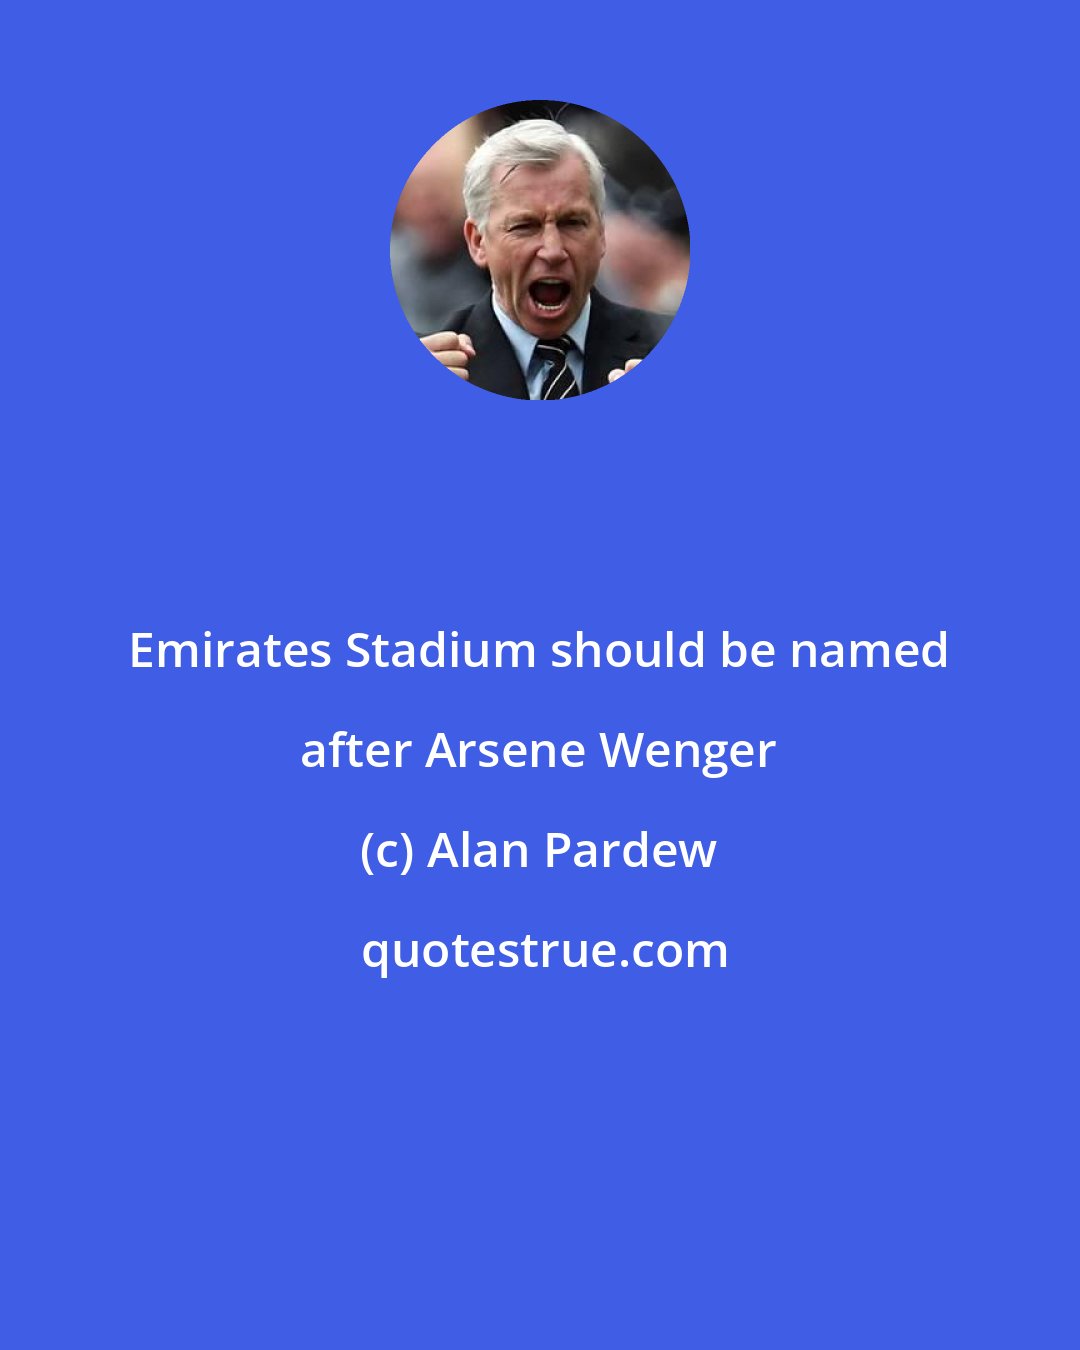 Alan Pardew: Emirates Stadium should be named after Arsene Wenger